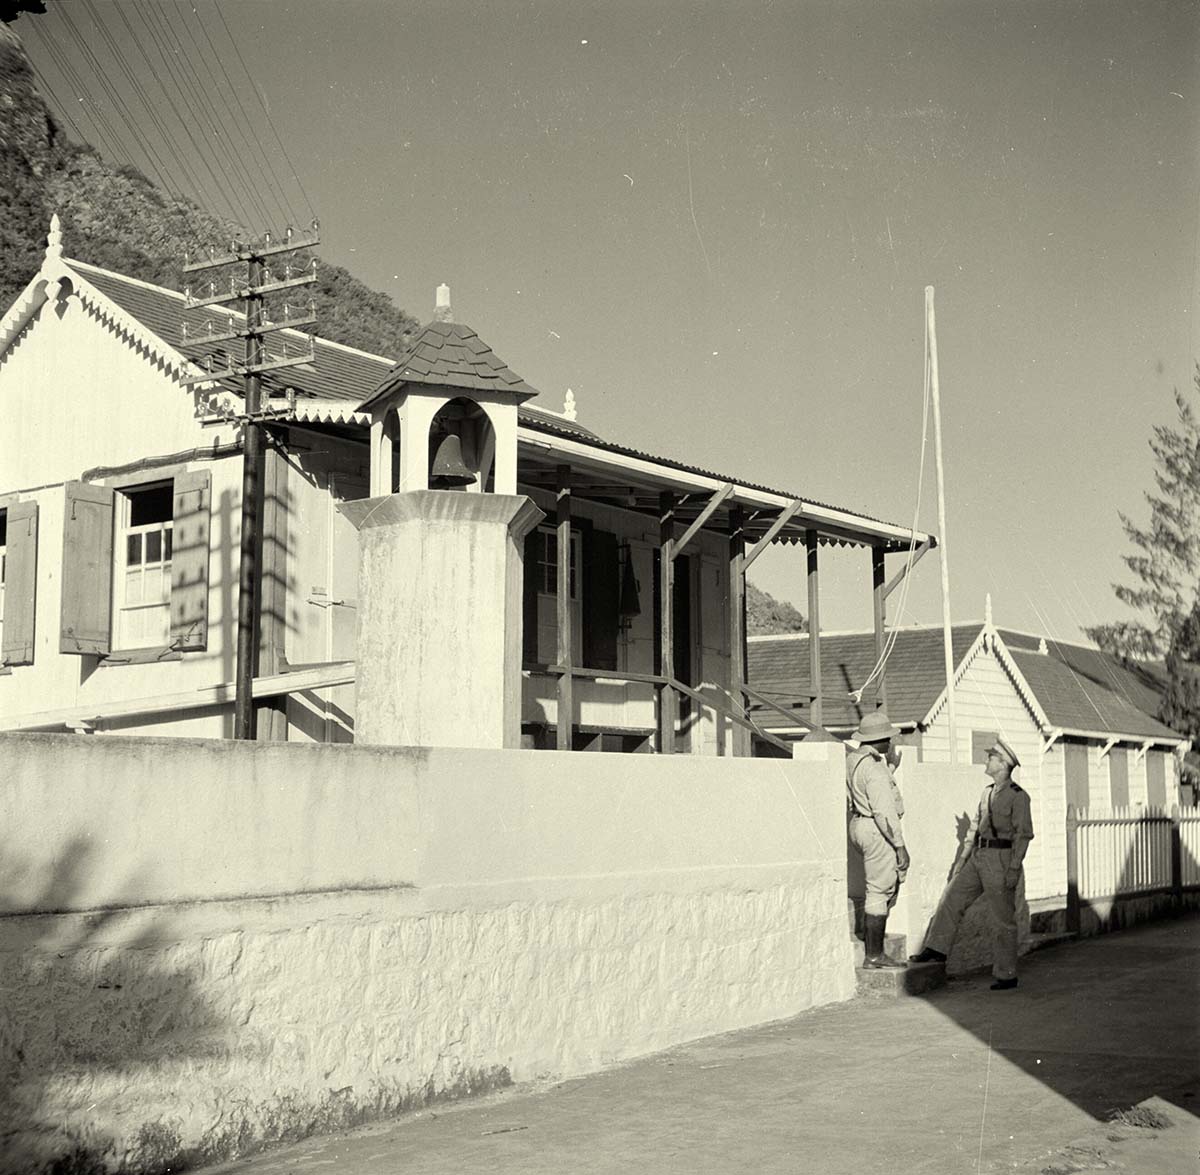 The Bottom. Police station, 1947